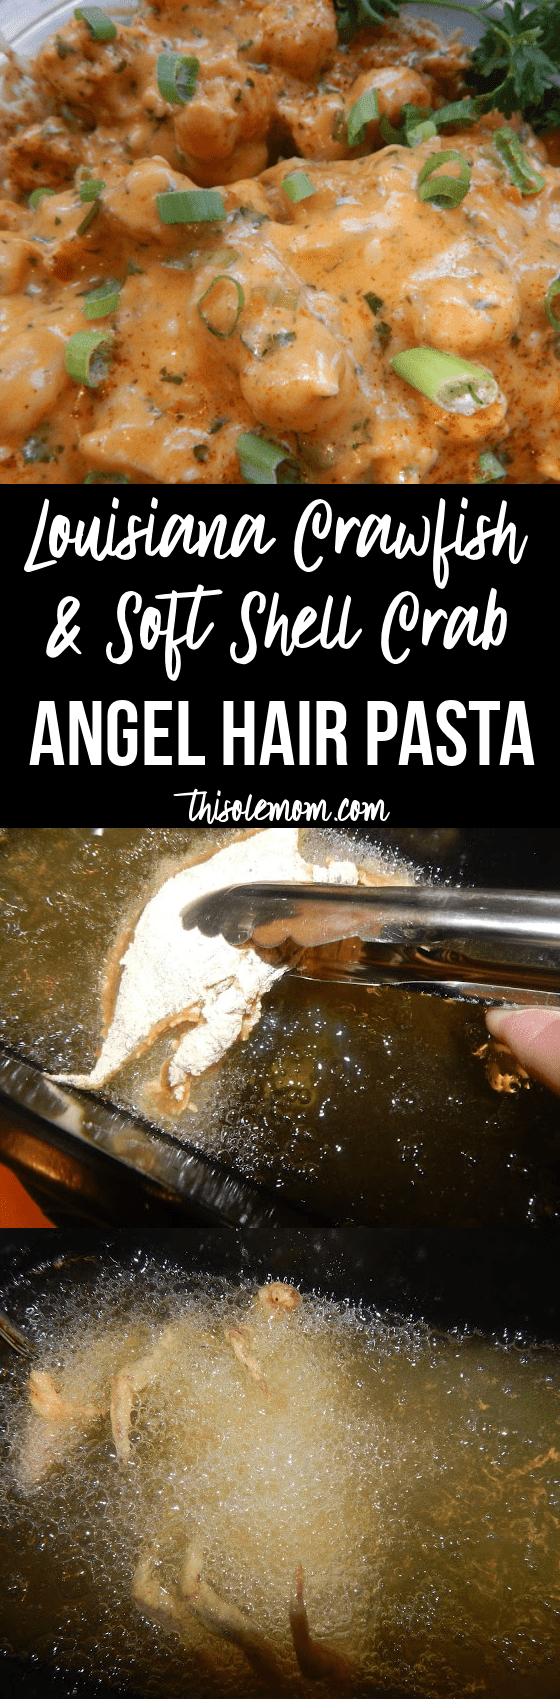 Louisiana Crawfish & Soft Shell Crab Over Angel Hair Pasta